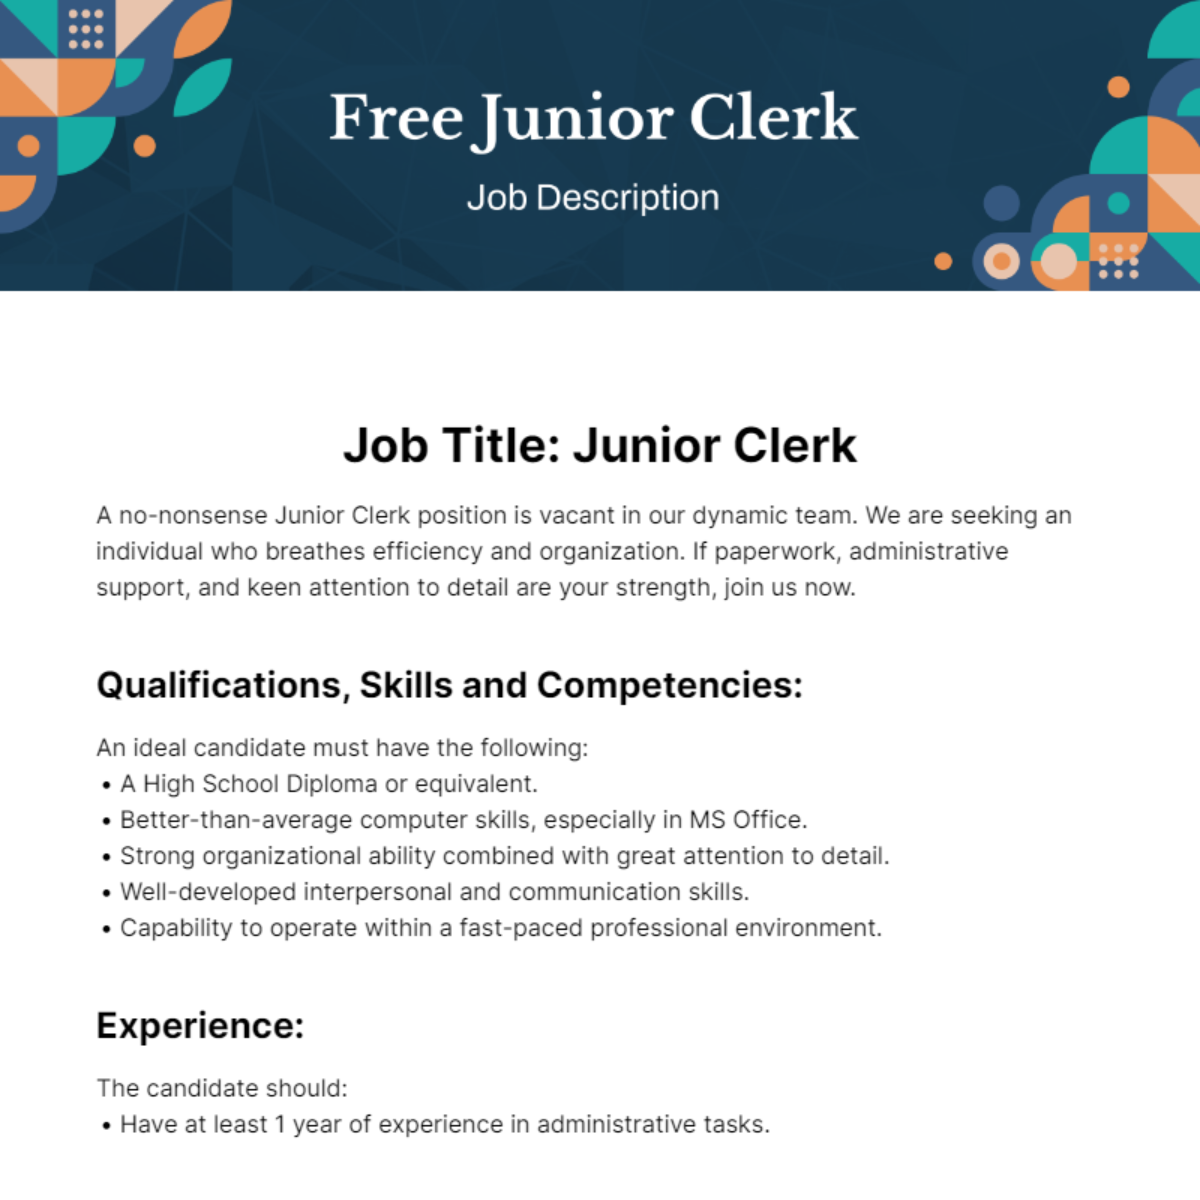 Free Junior Clerk Job Description Template